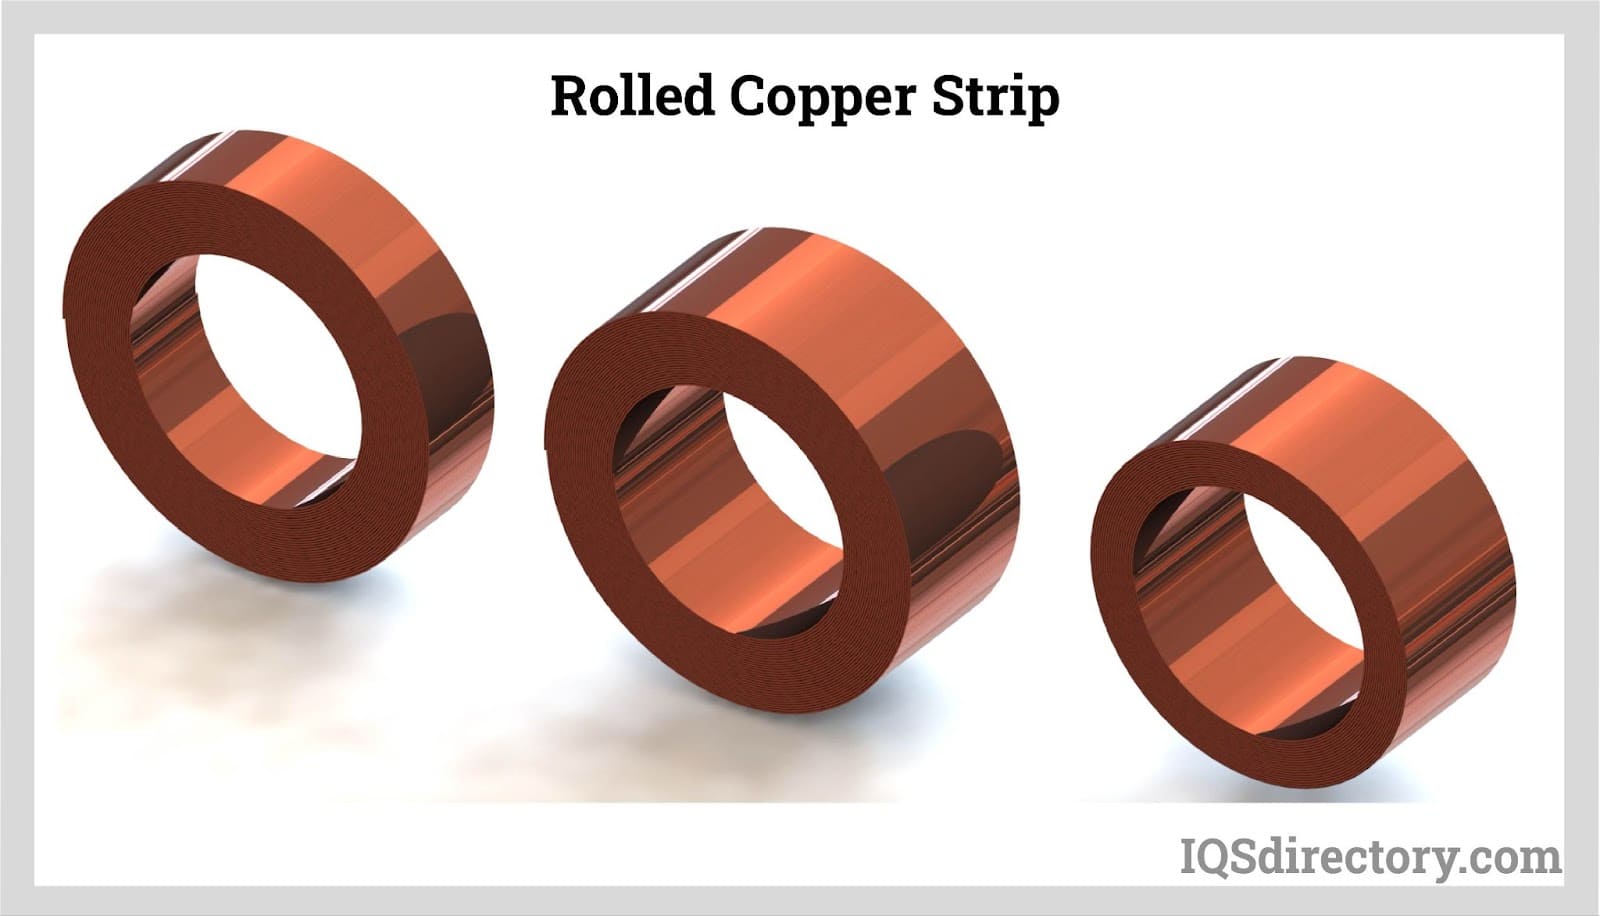 Rolled Copper Strip